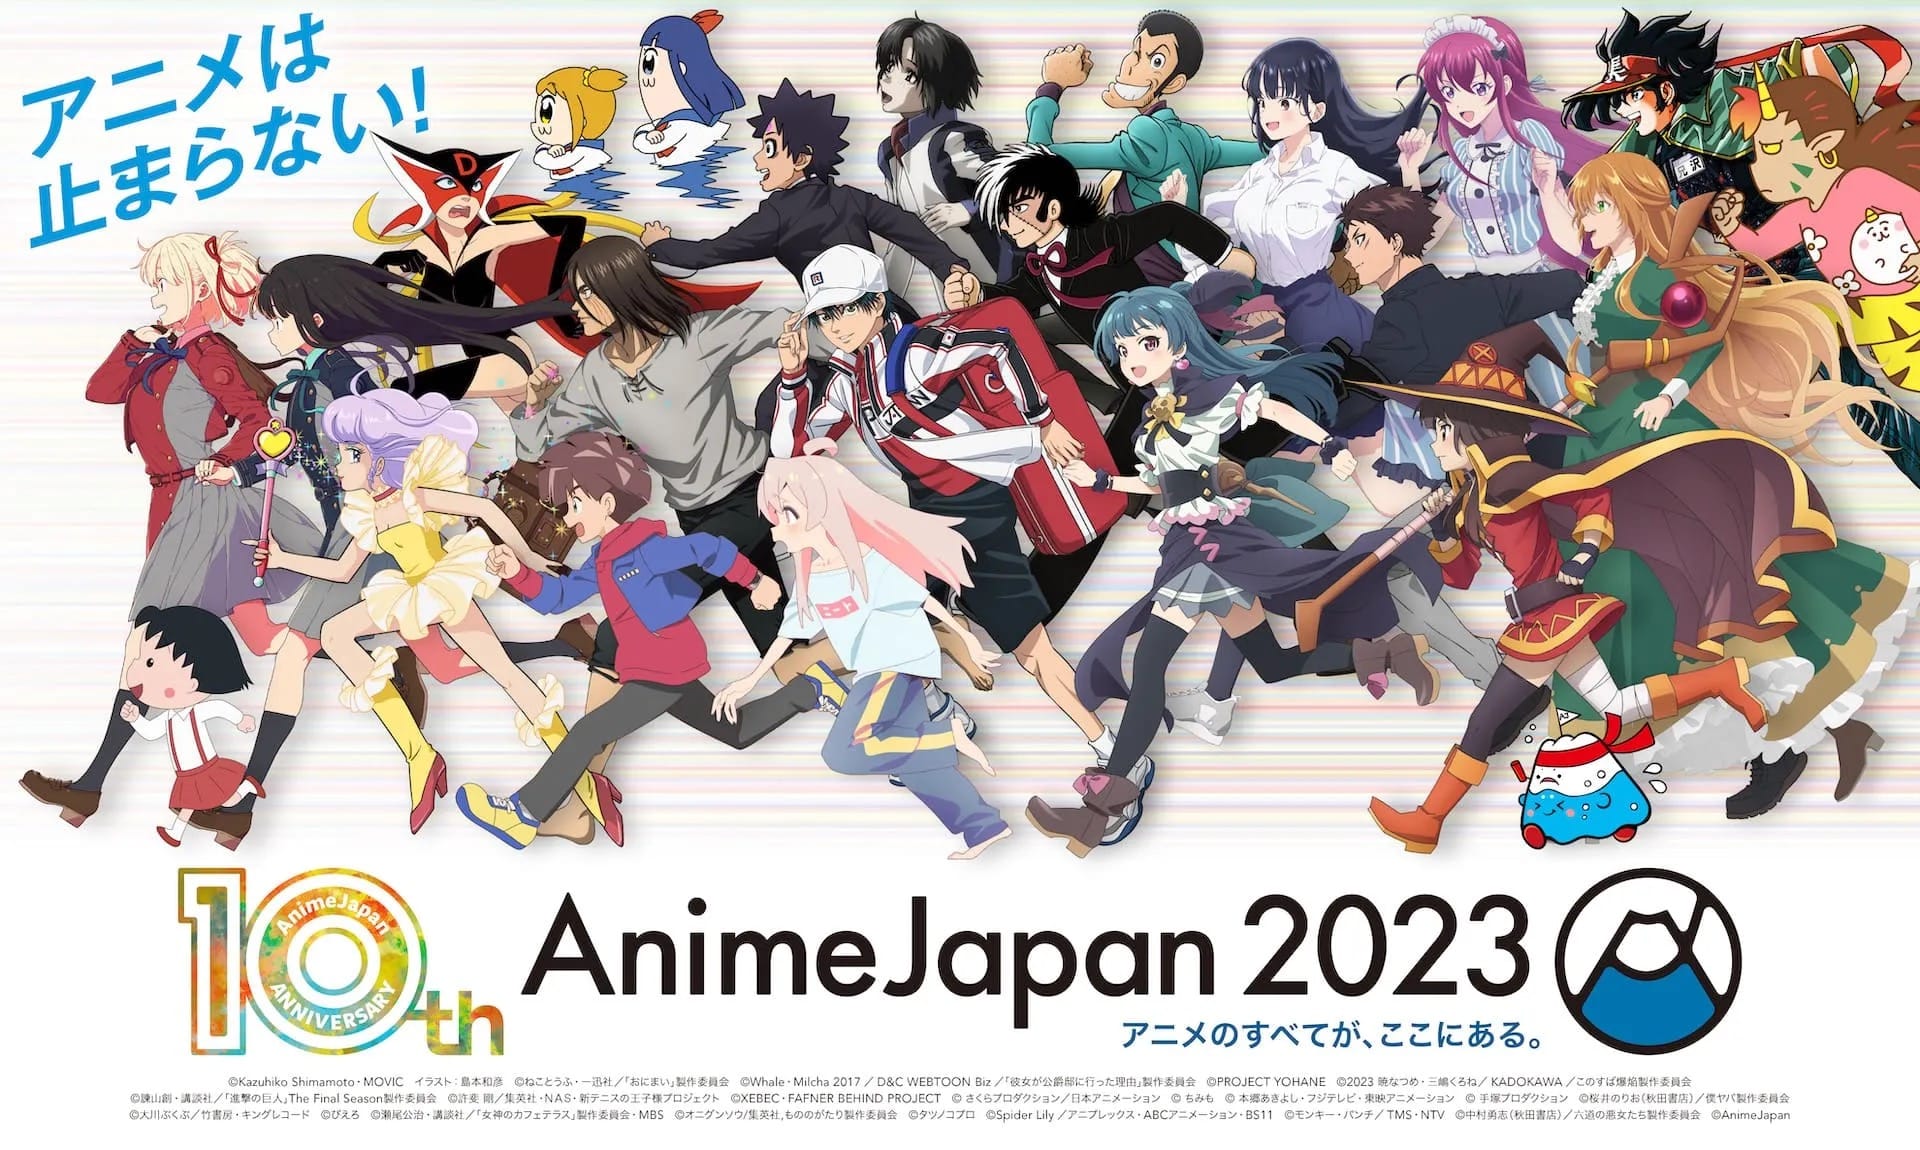 AnimeJapan2023 in 東京ビッグサイト 全ステージプログラムが解禁!